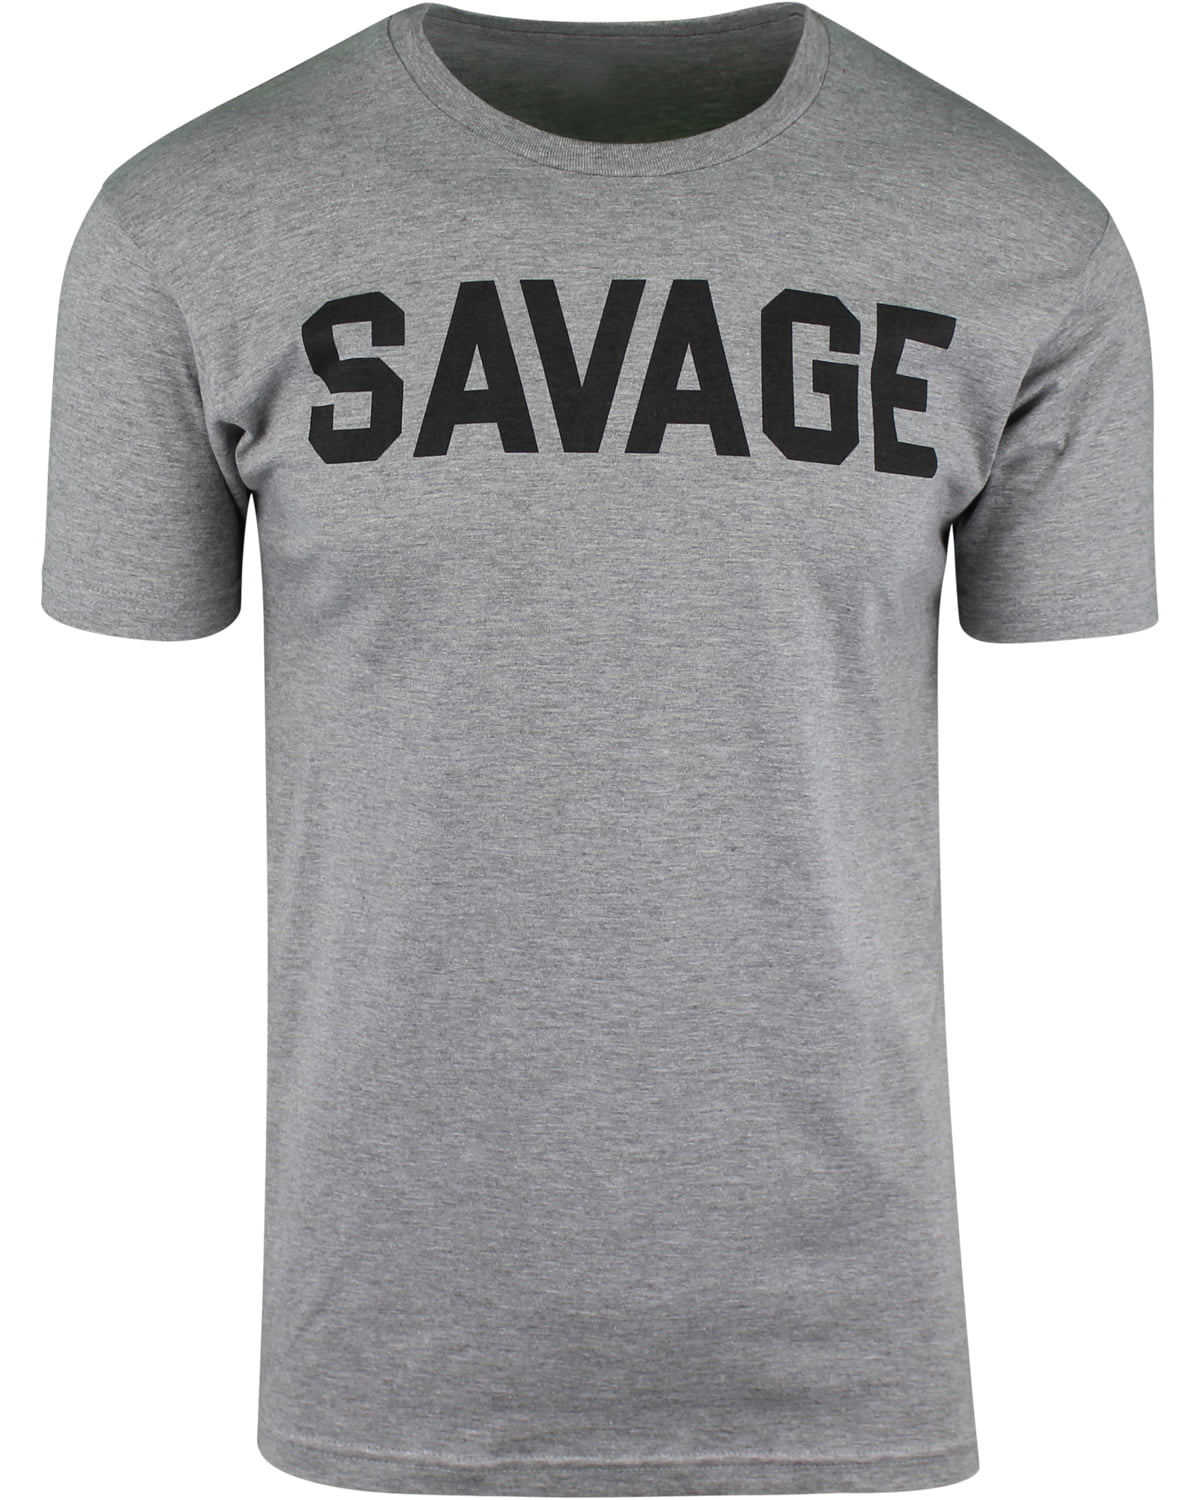 Funny Graphic T-Shirt DOG SAVAGE Printed Fashion Casual Hip Hop Humor Tee 